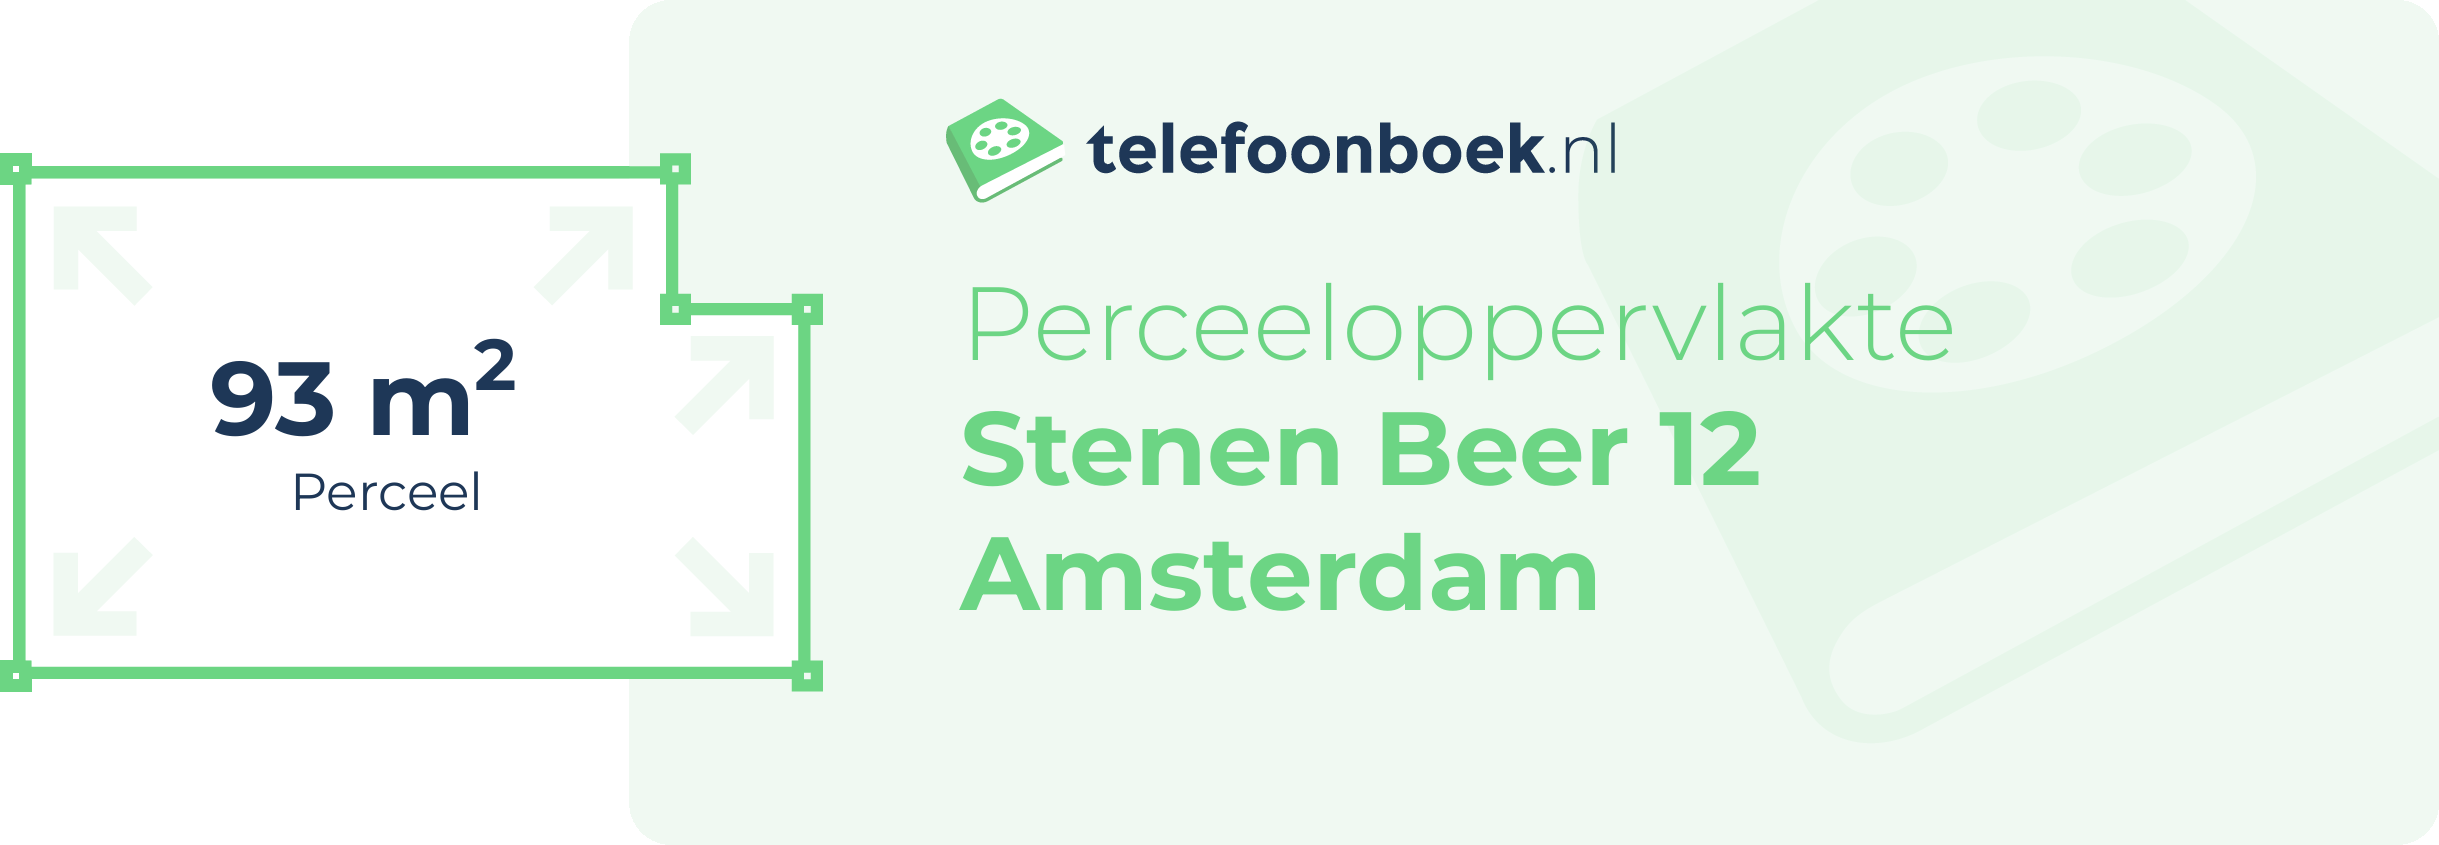 Perceeloppervlakte Stenen Beer 12 Amsterdam